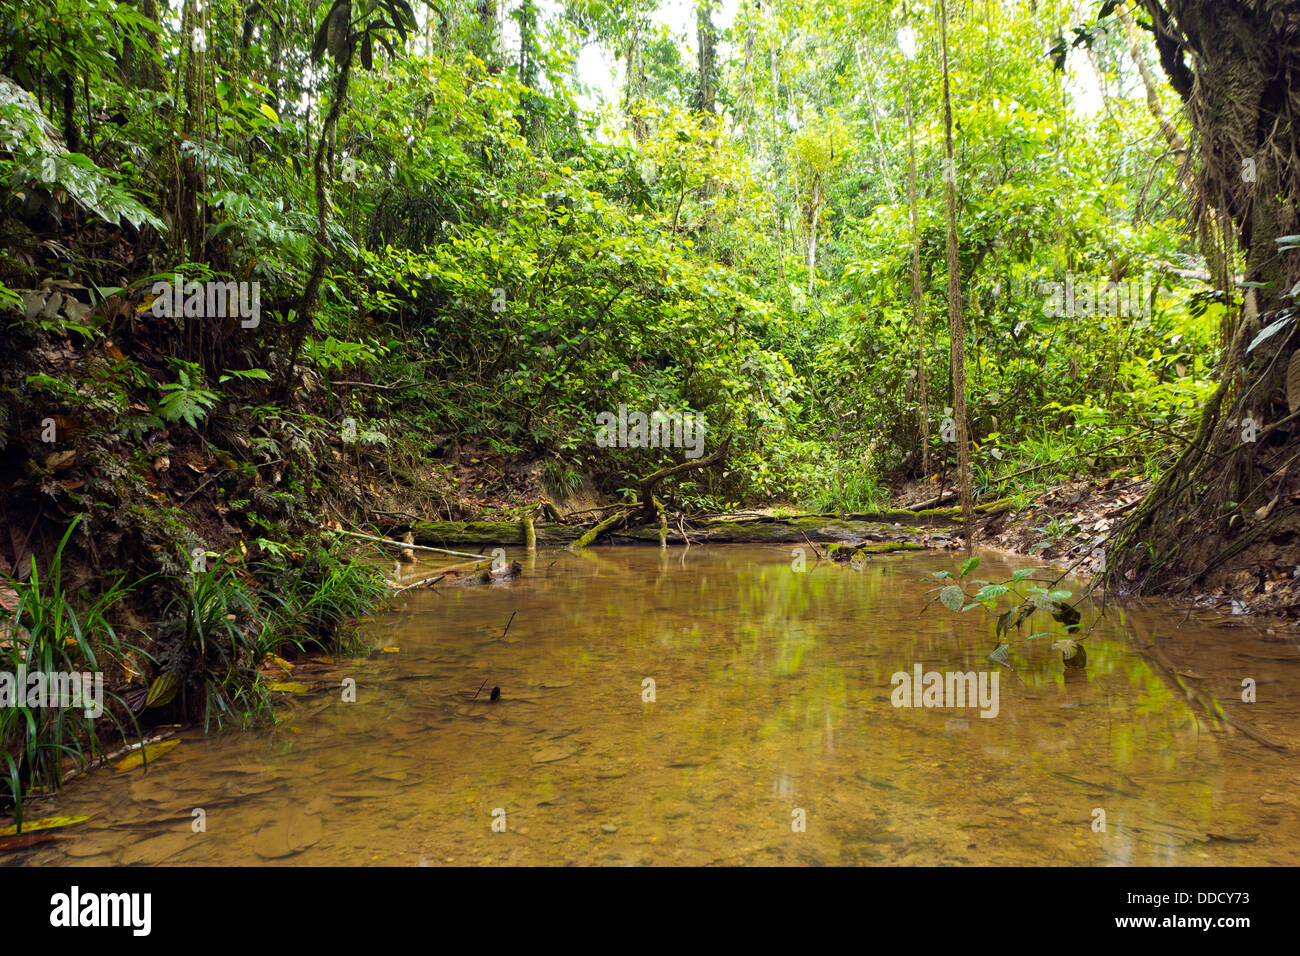 A shady rainforest stream in the Ecuadorian Amazon Stock Photo